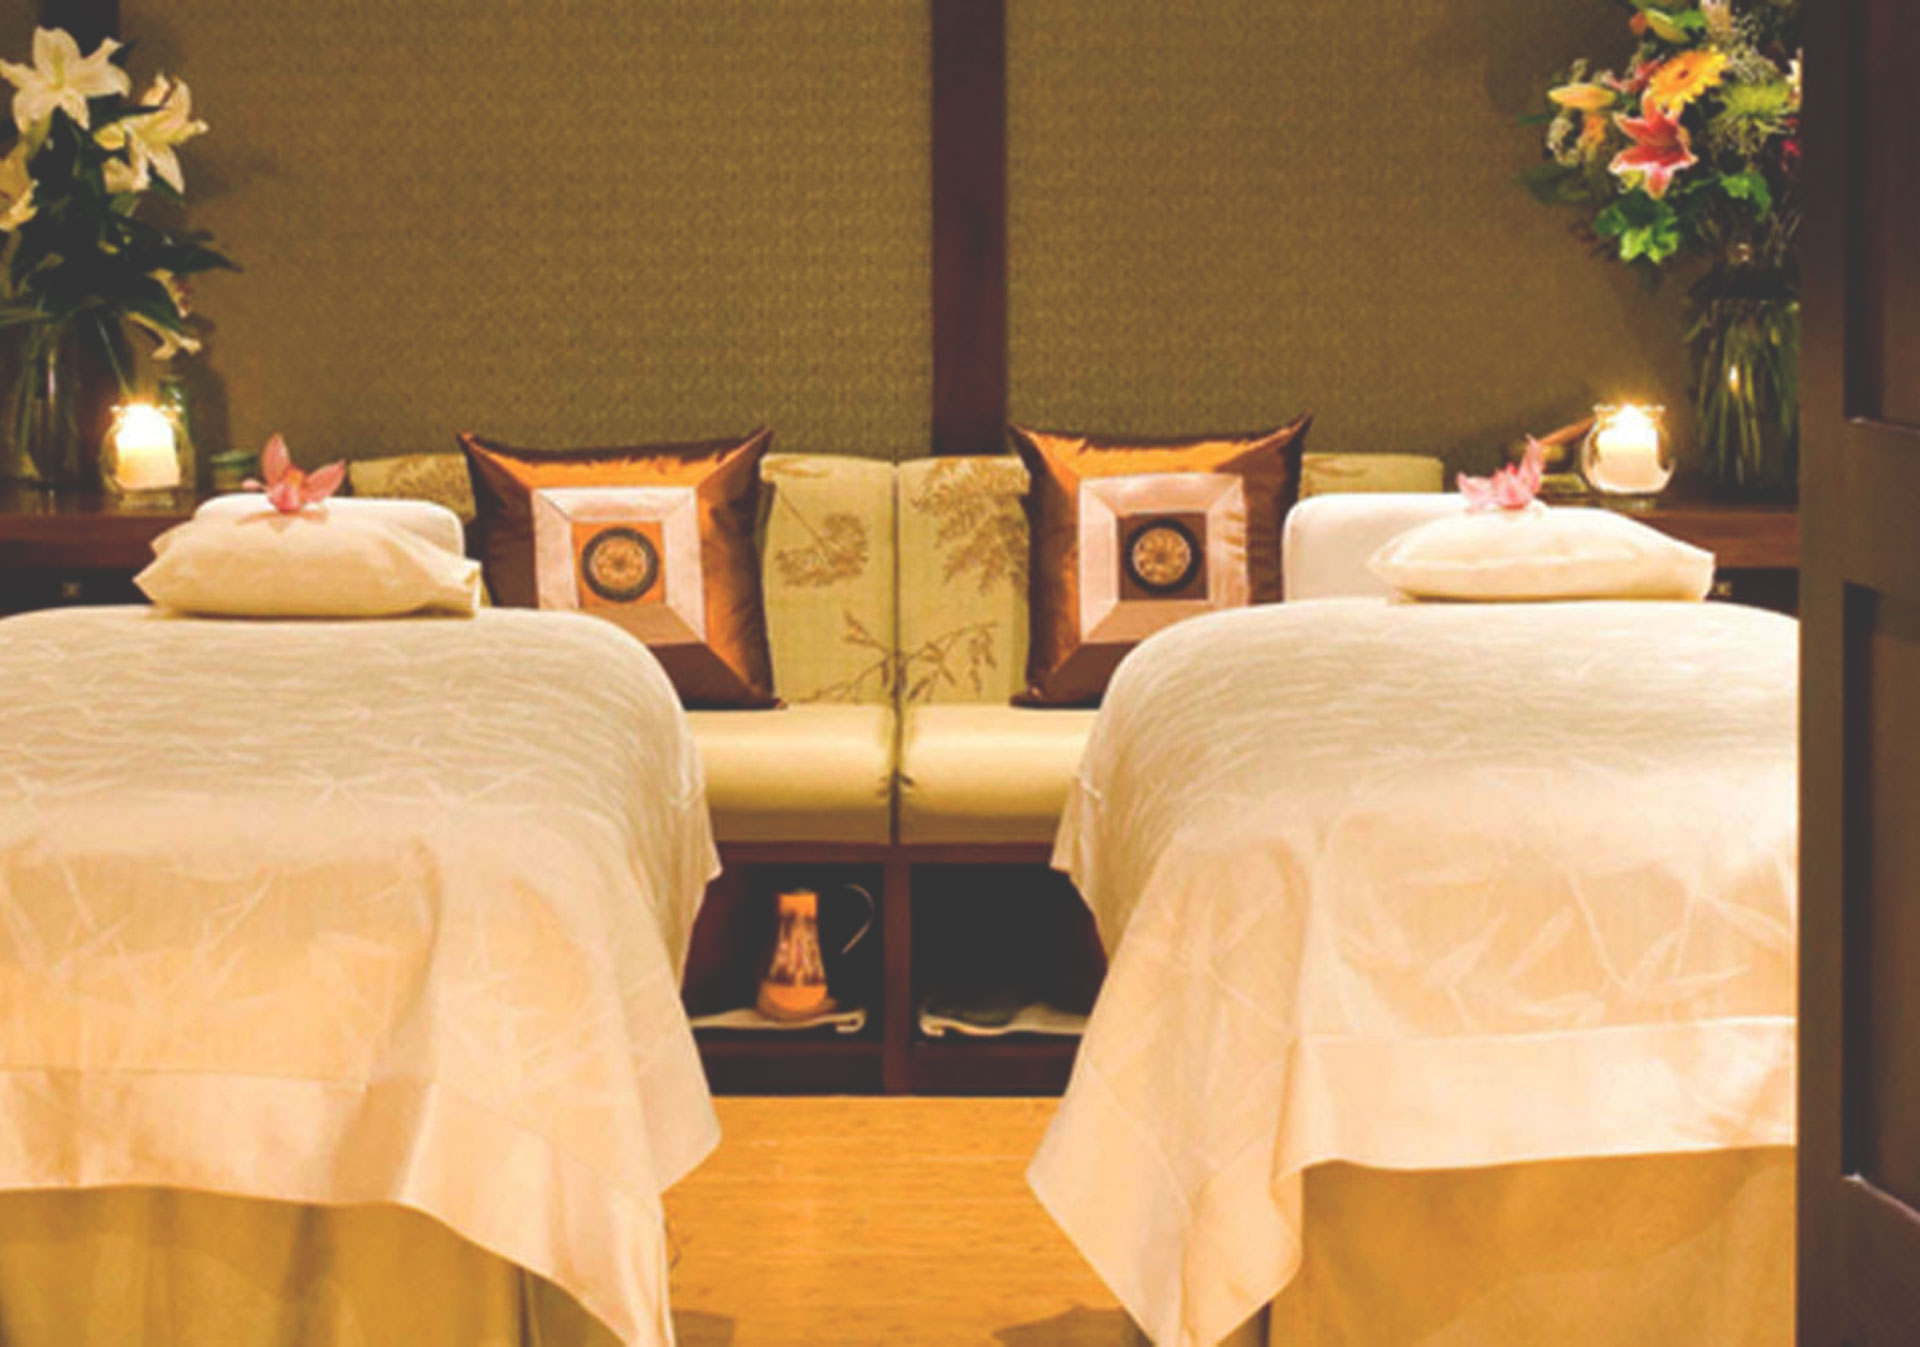 Enjoy a couple’s massage at The Spa Ritual.